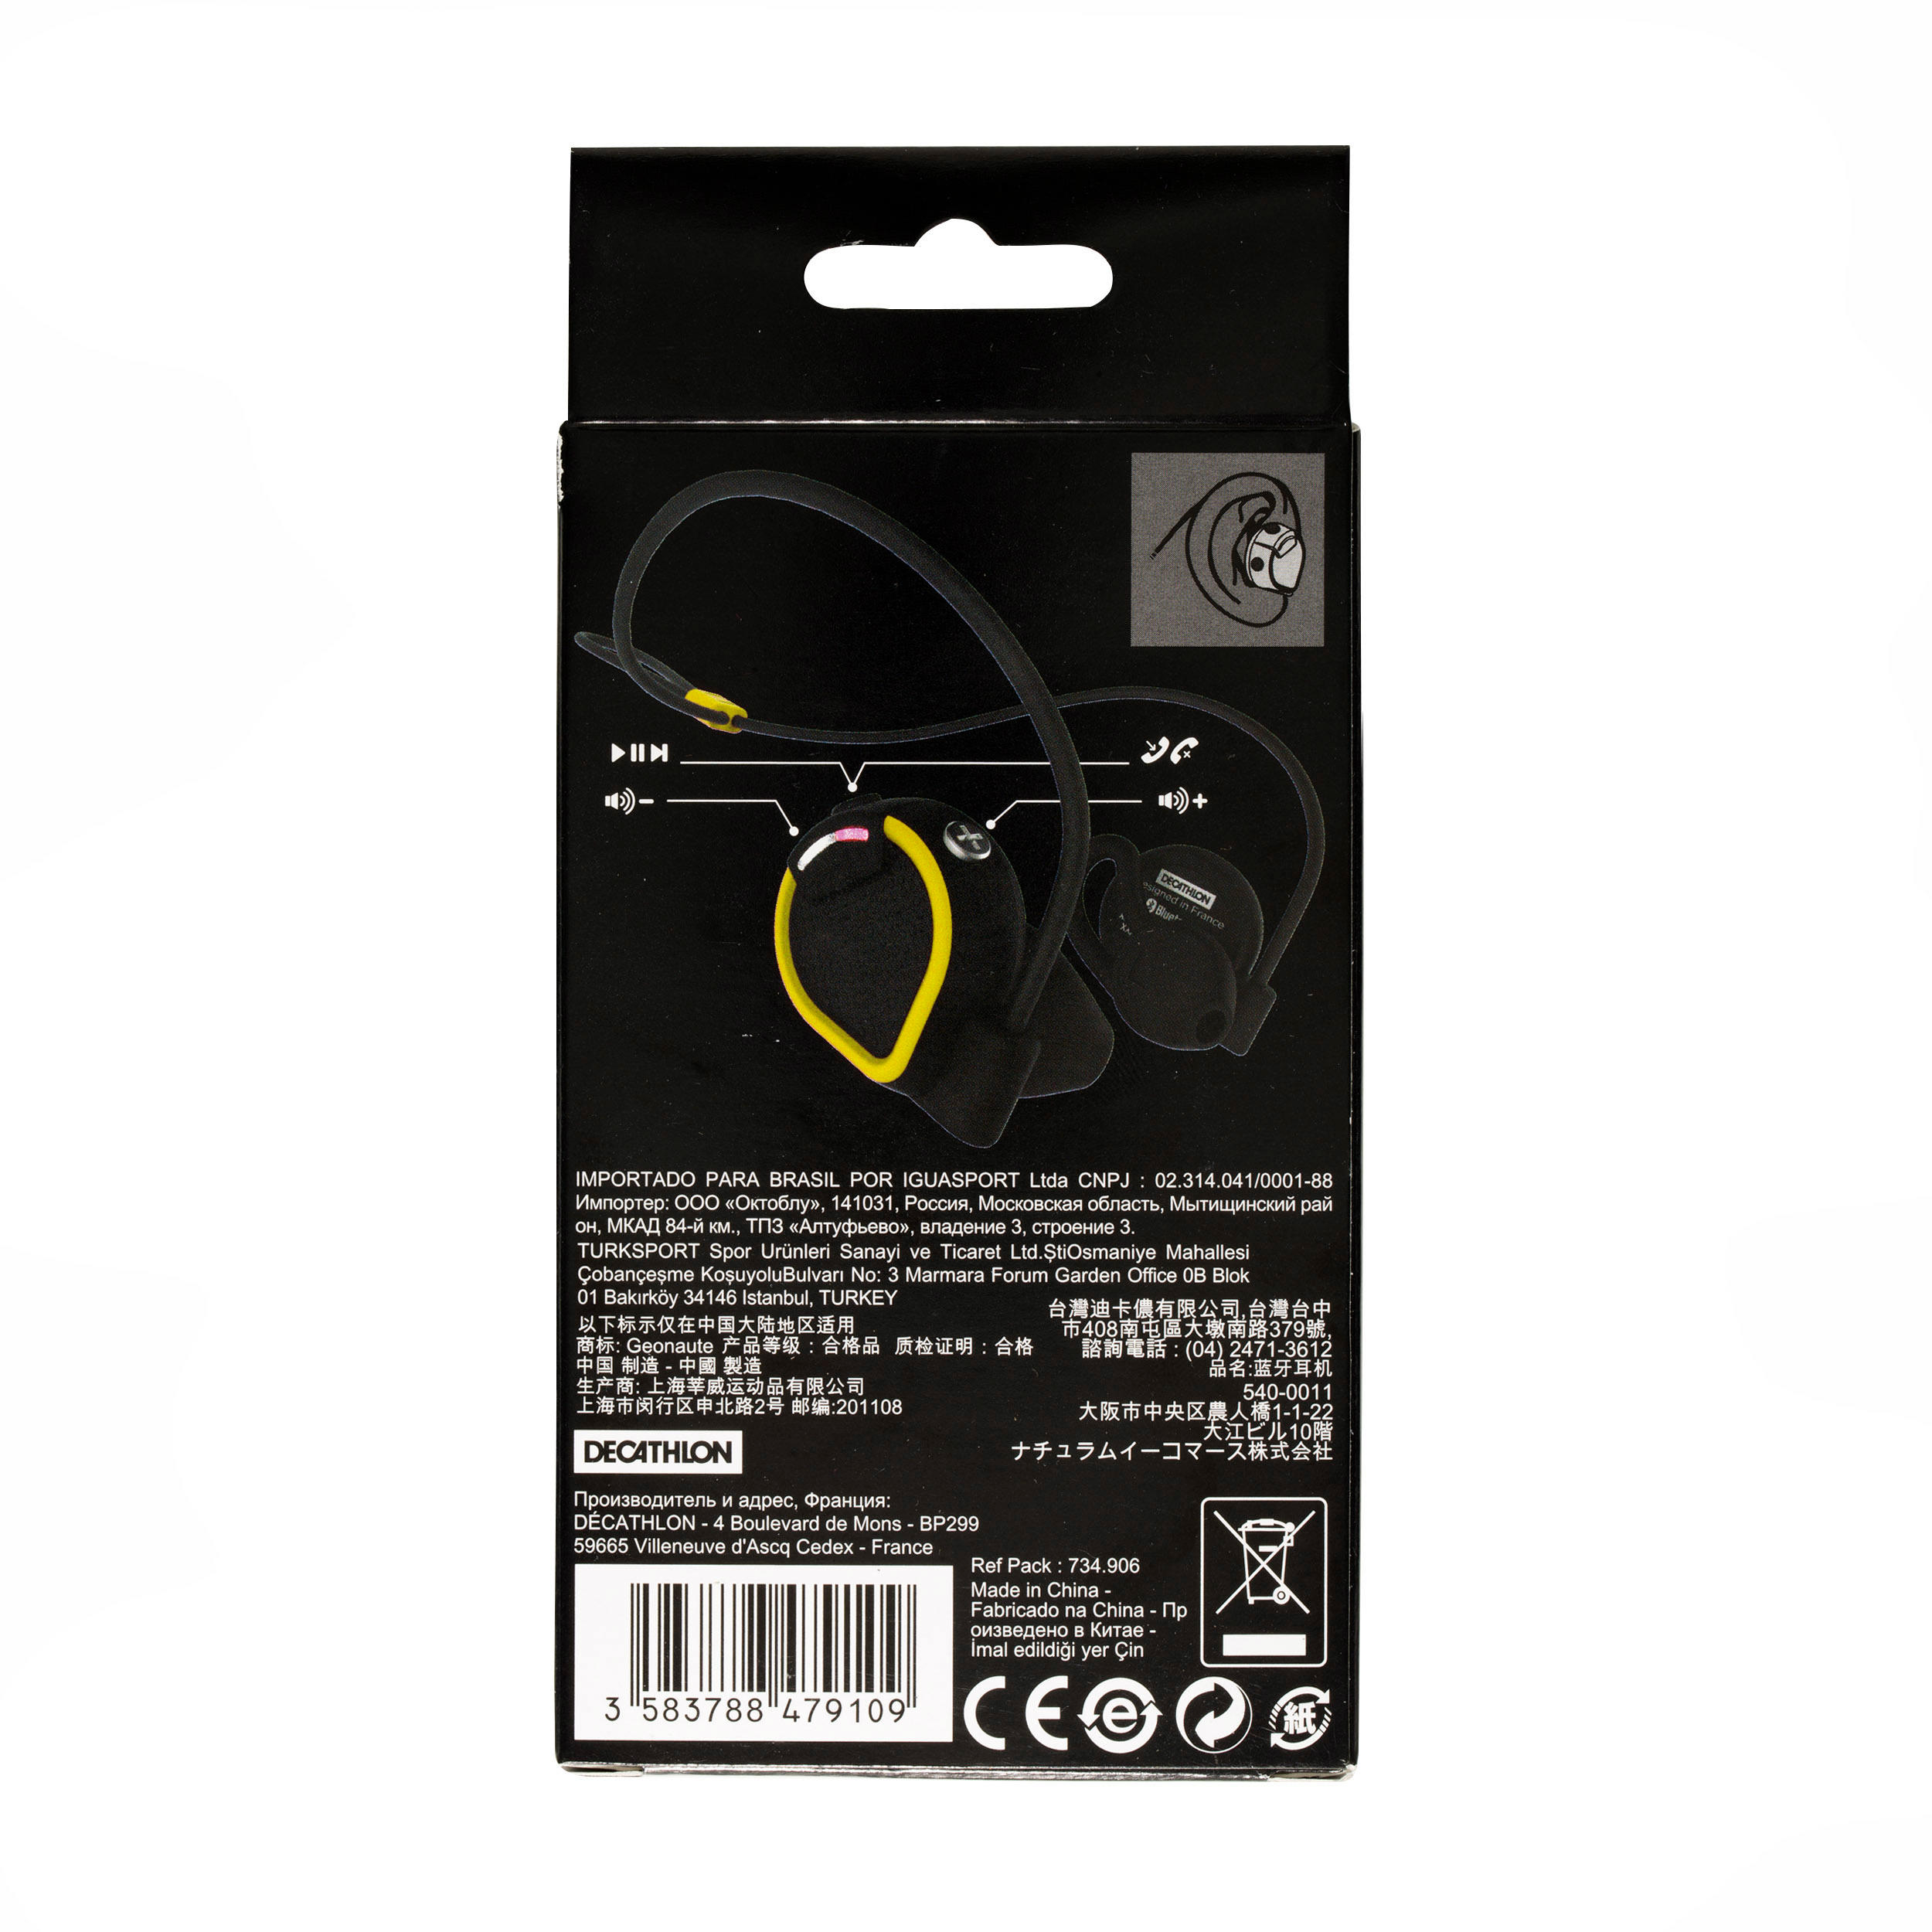 ONear Bluetooth Wireless Sports Earbuds Black Yellow 9/10